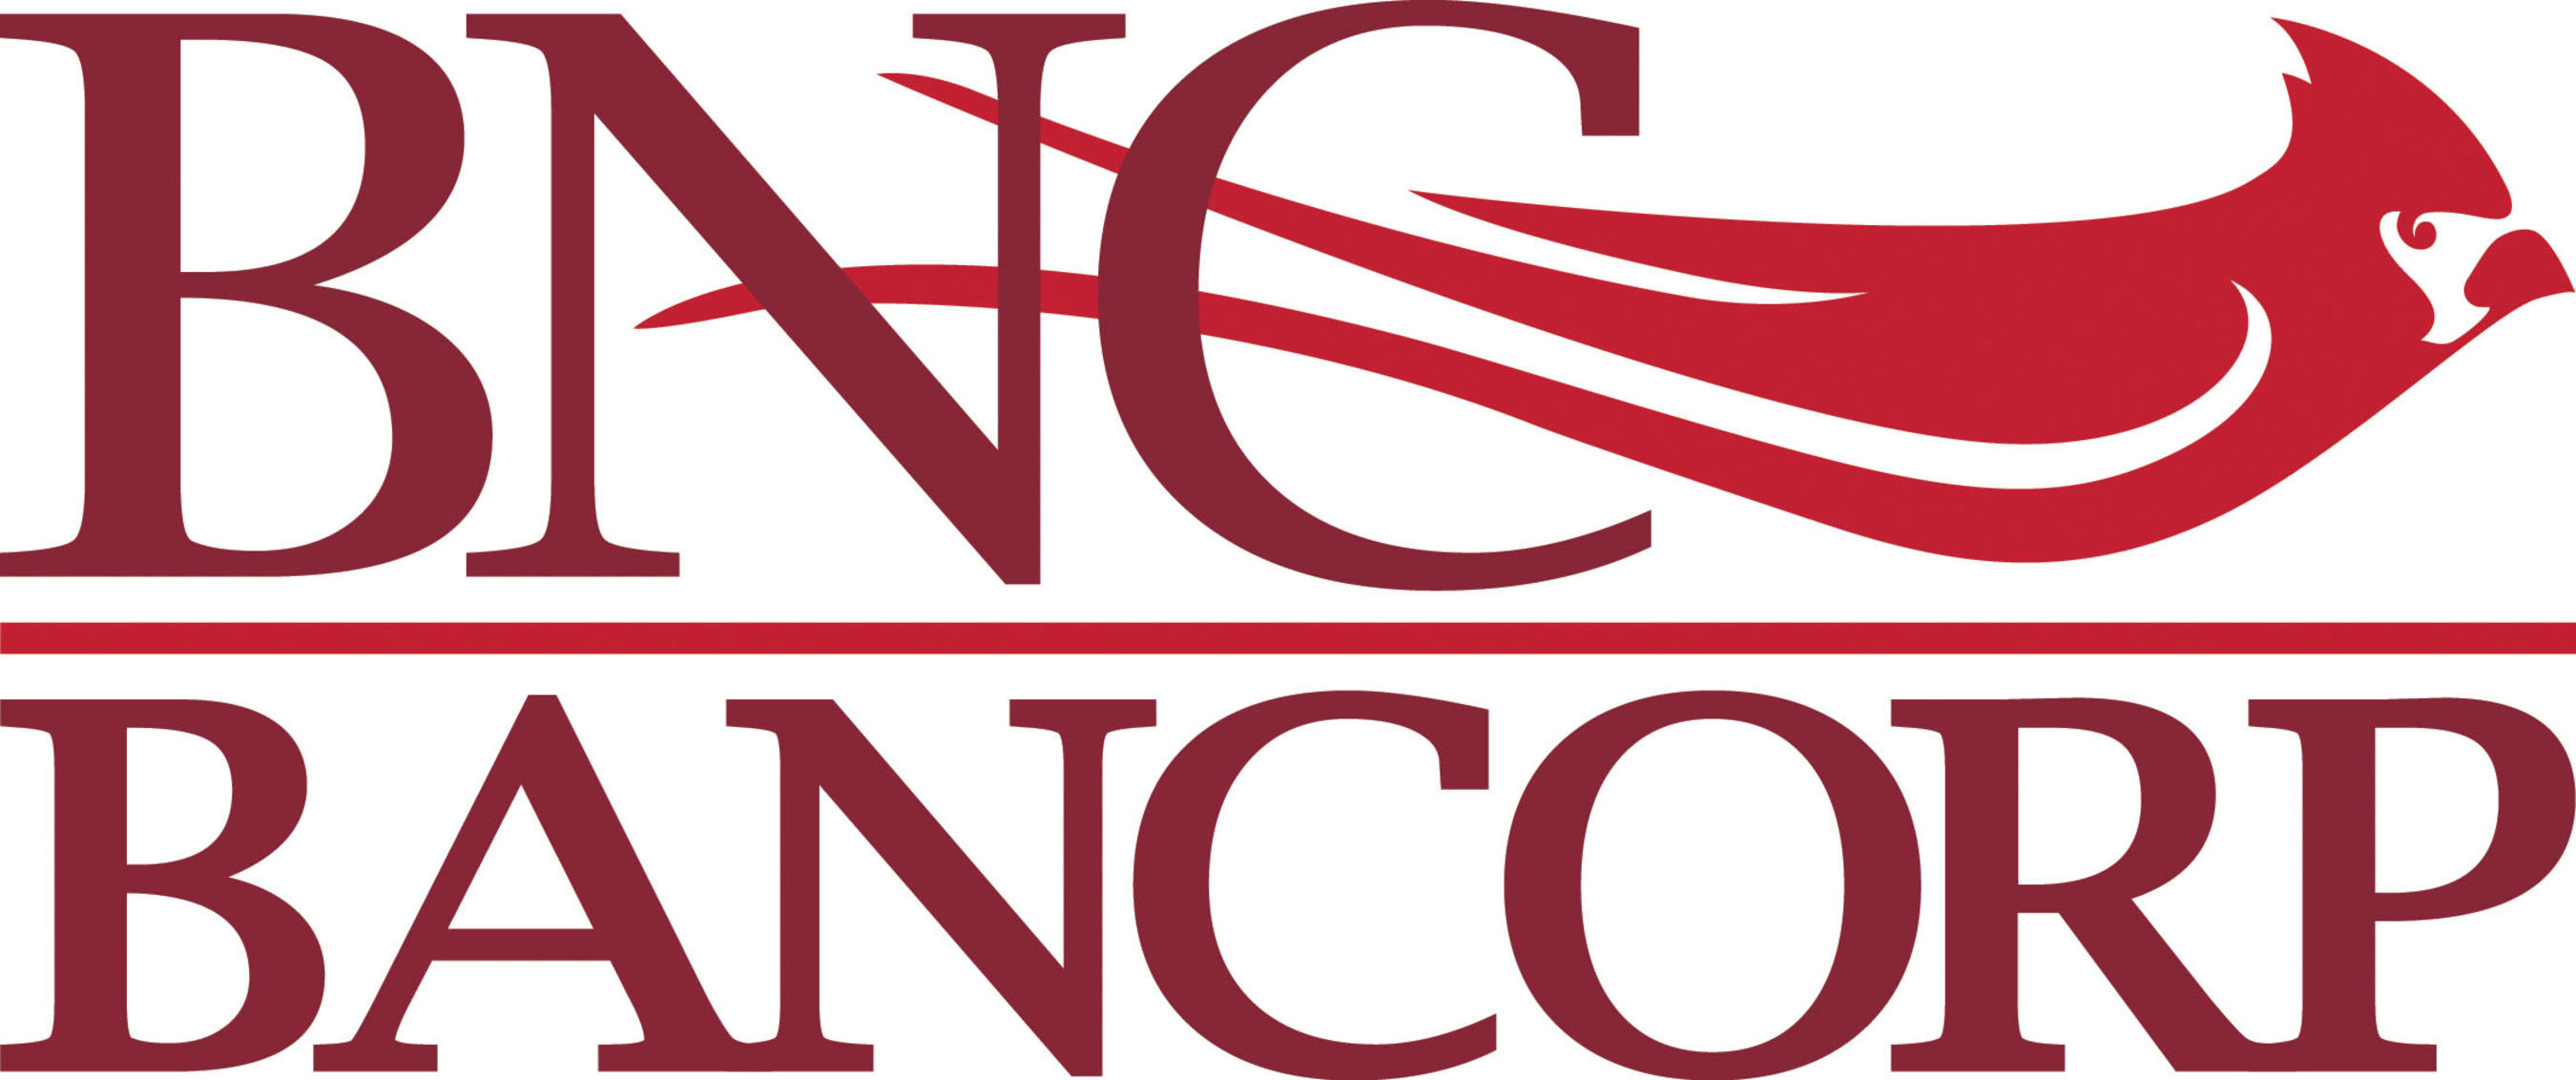 BNC Bancorp logo. BNC Bancorp is a one-bank holding company for Bank of North Carolina.